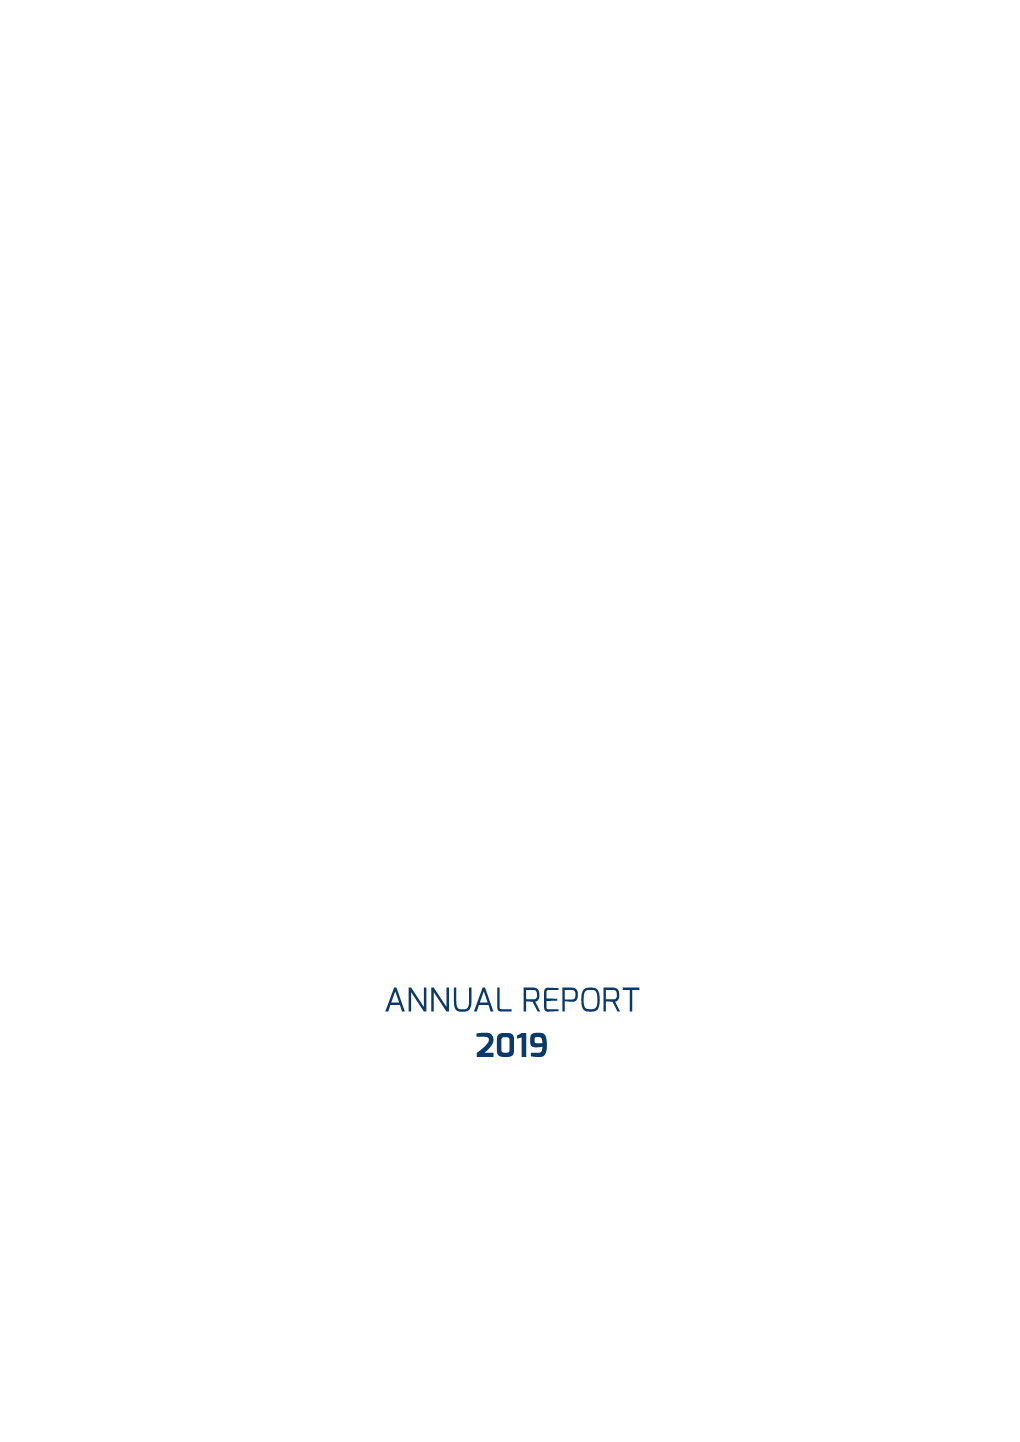 Annual Report Alpha Bank Albania 2019.Pdf